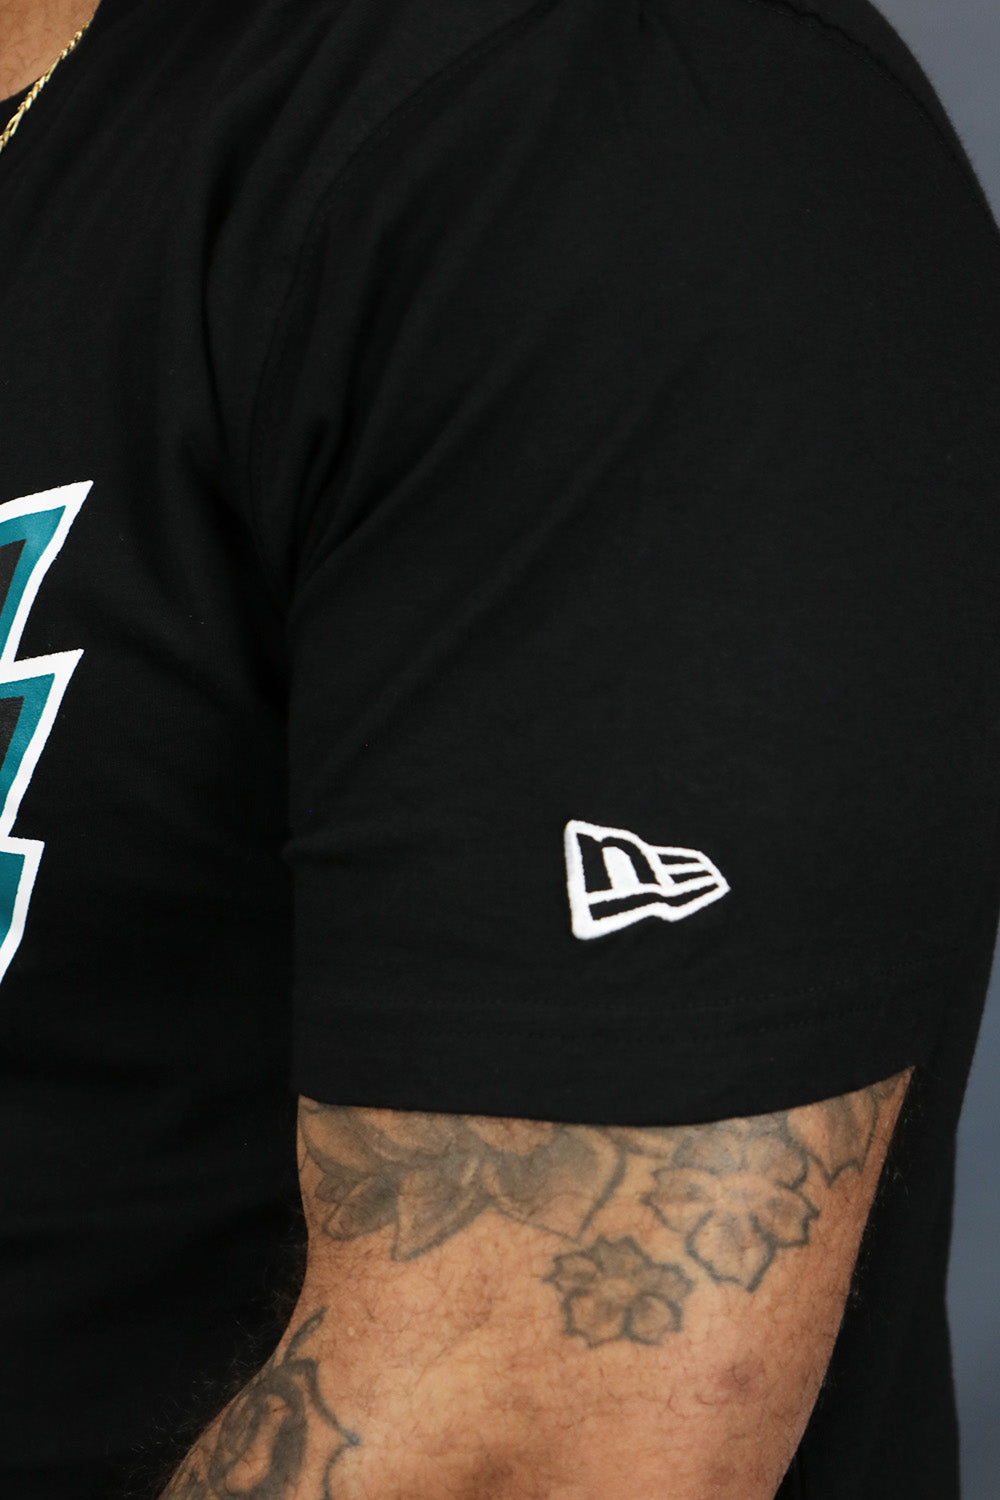 A close up of the New Era logo on the Philadelphia Eagles Shimmer Super Bowl LIII Shirt | New Era Black